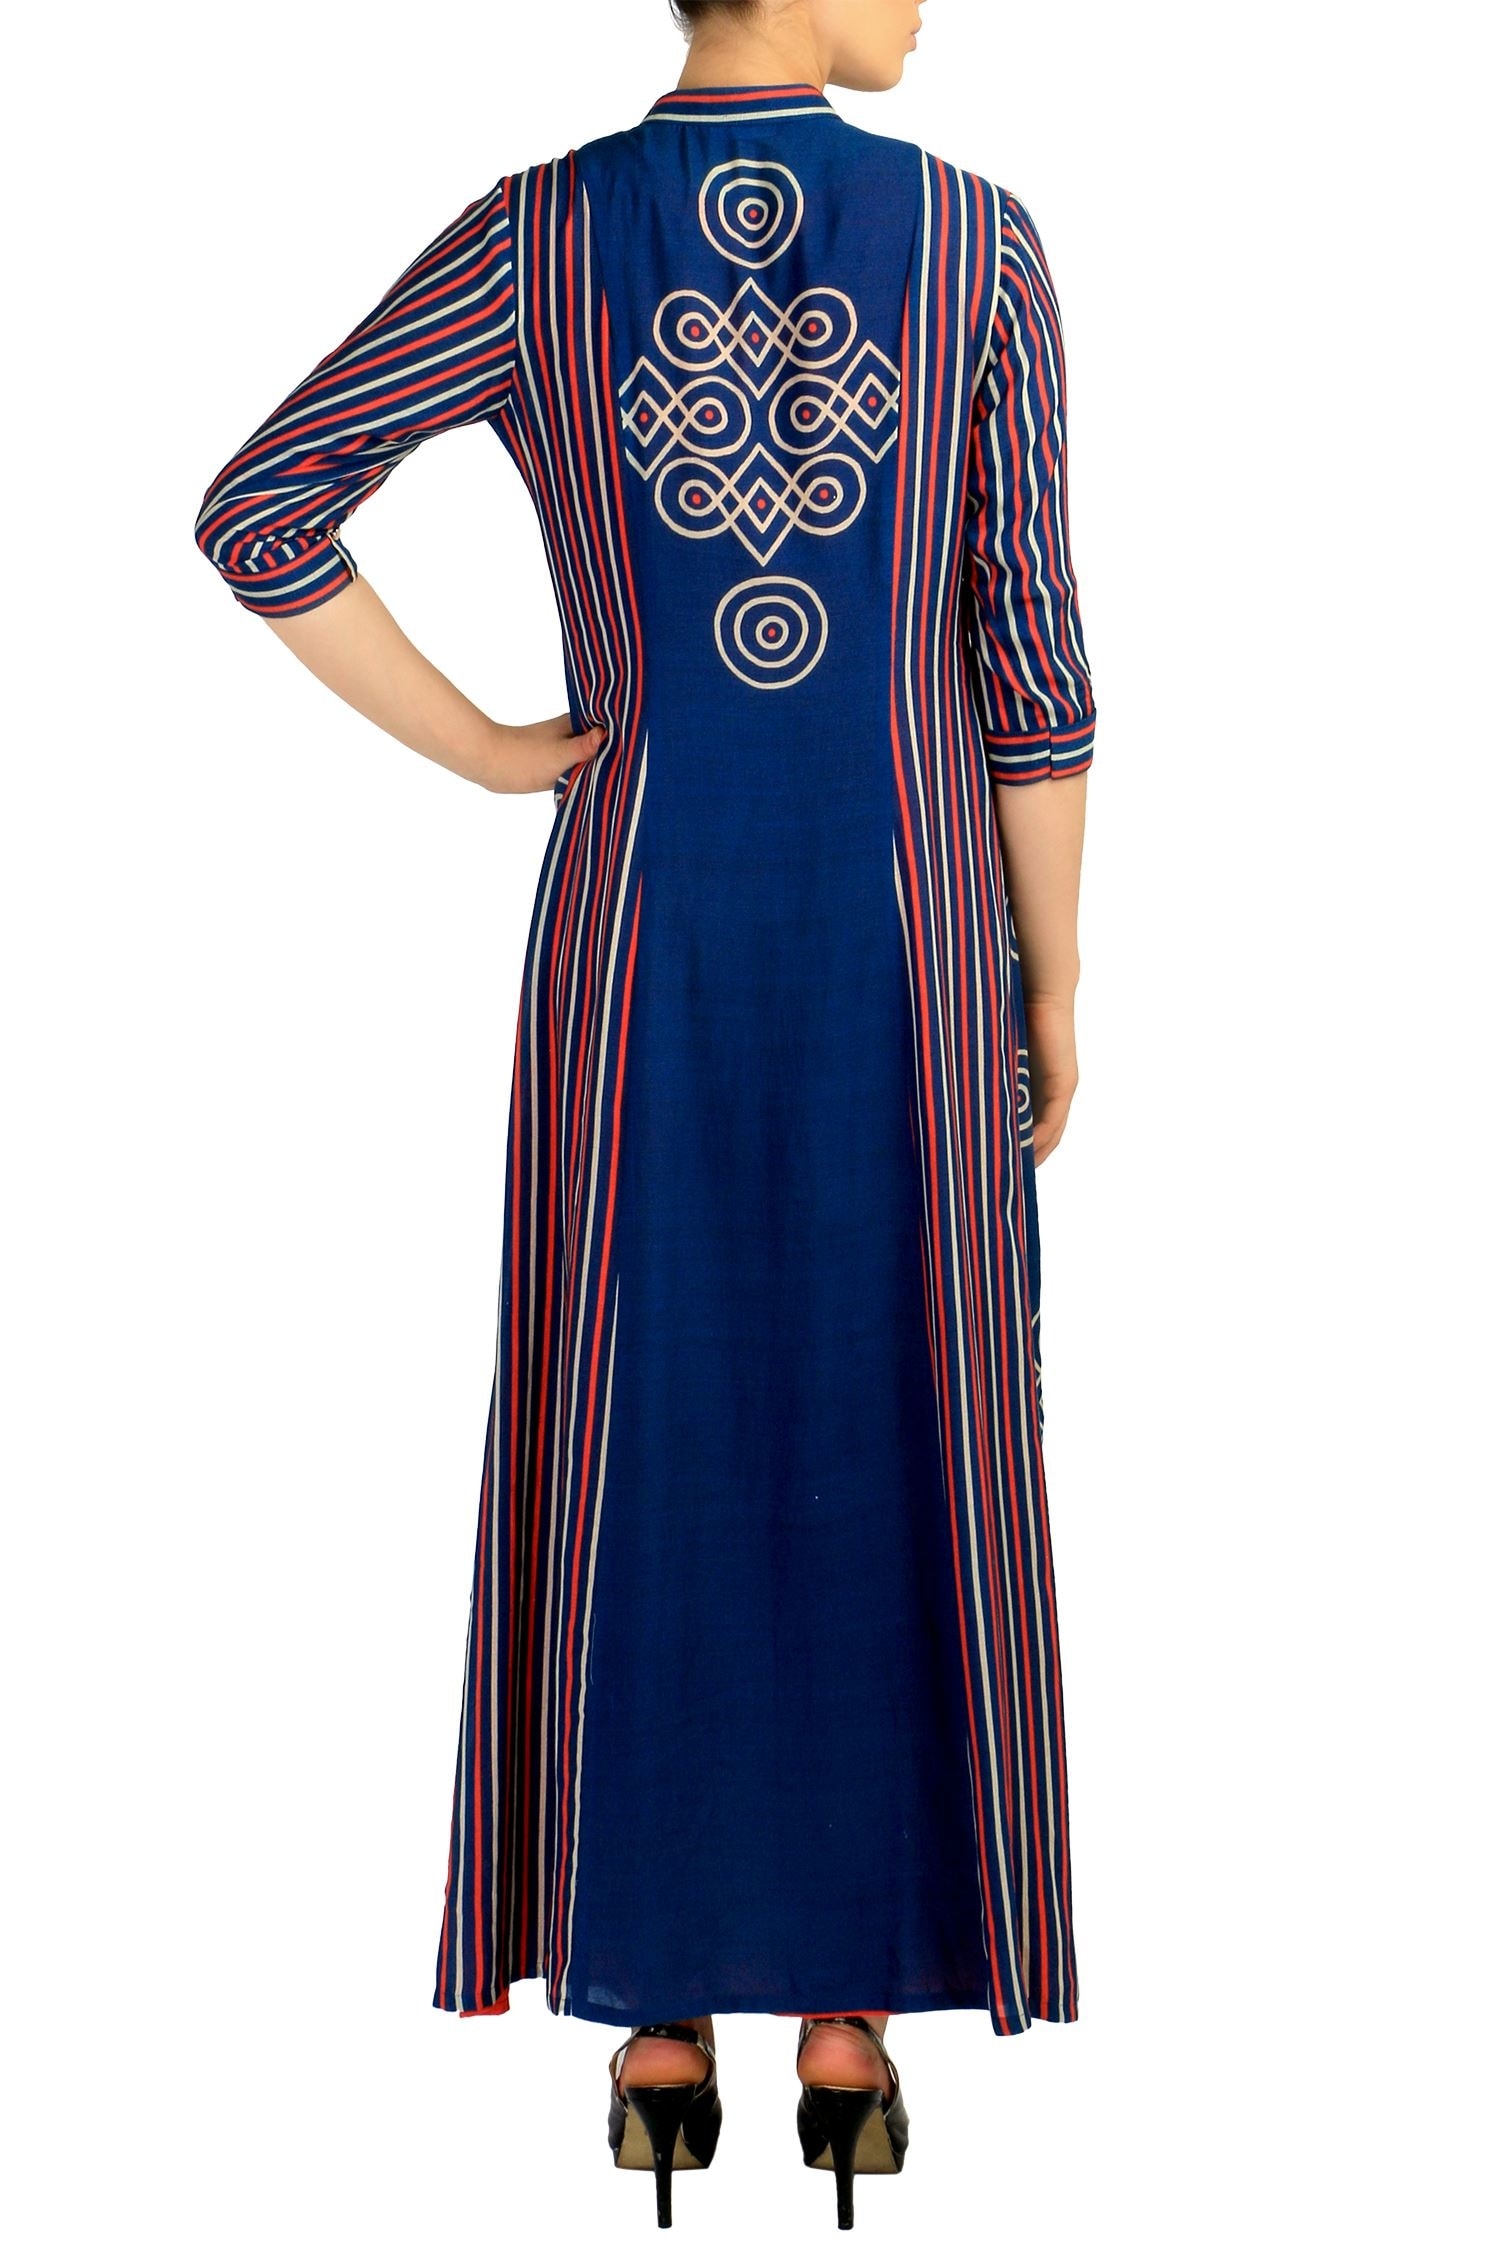 Soup by Sougat Paul Blue Cotton Silk Mandarin Collar Striped Printed Dress For Women